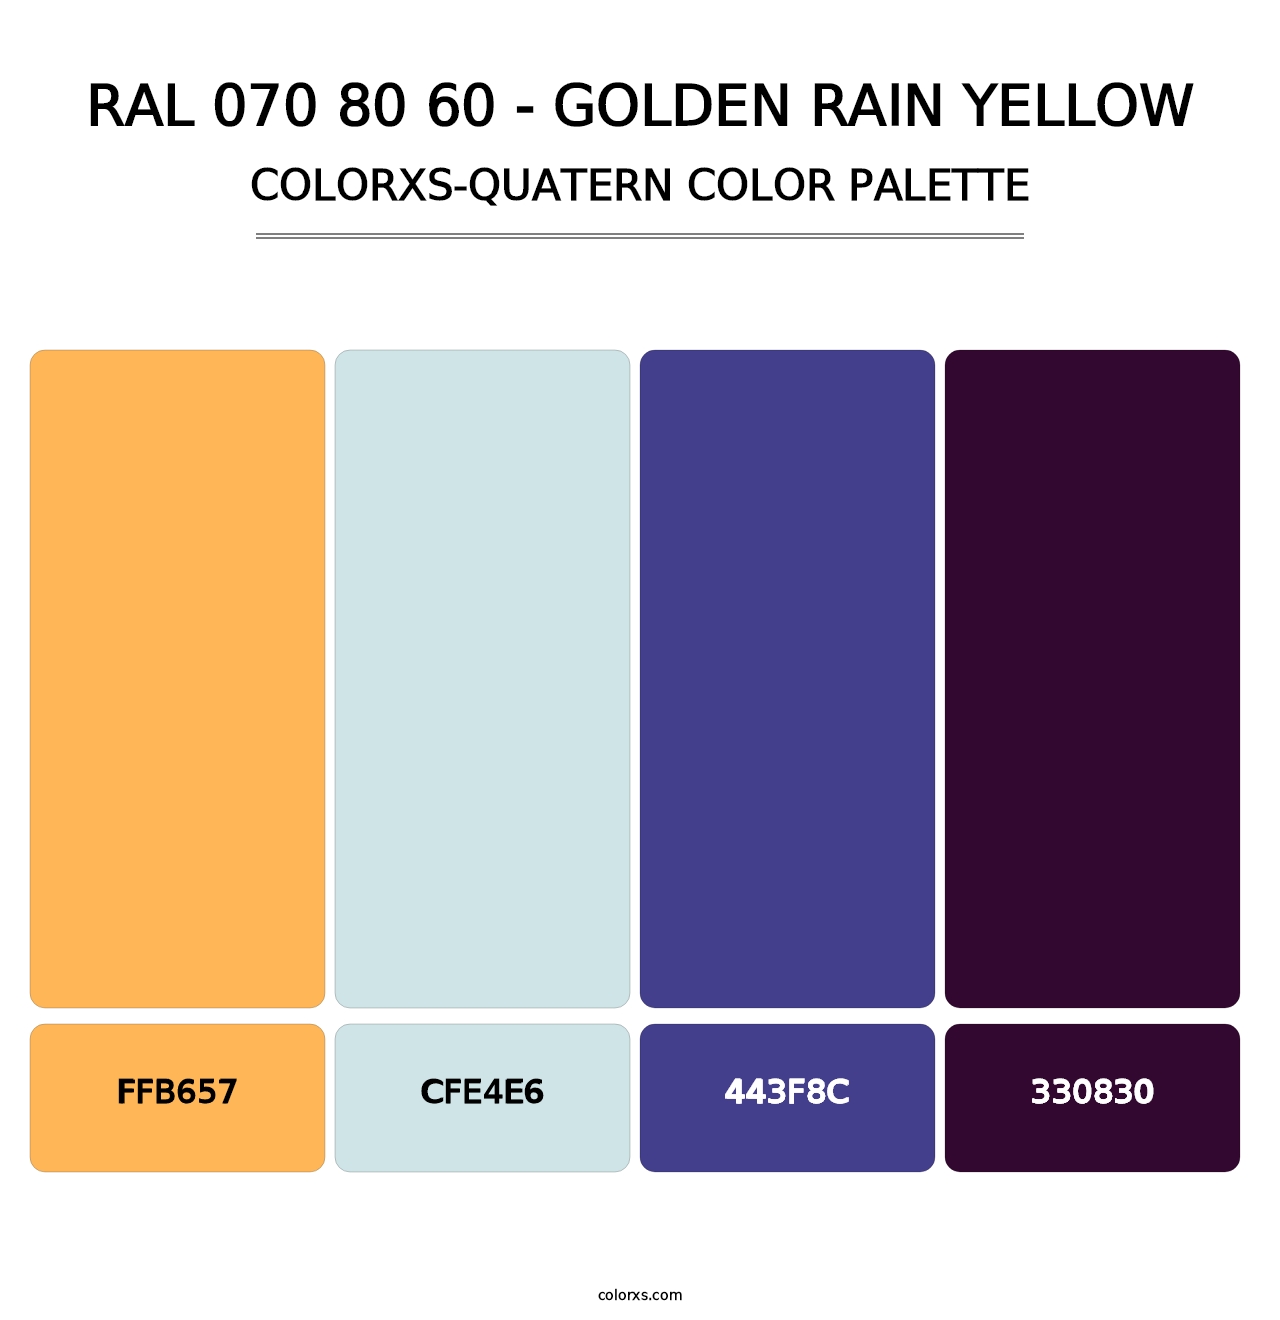 RAL 070 80 60 - Golden Rain Yellow - Colorxs Quatern Palette